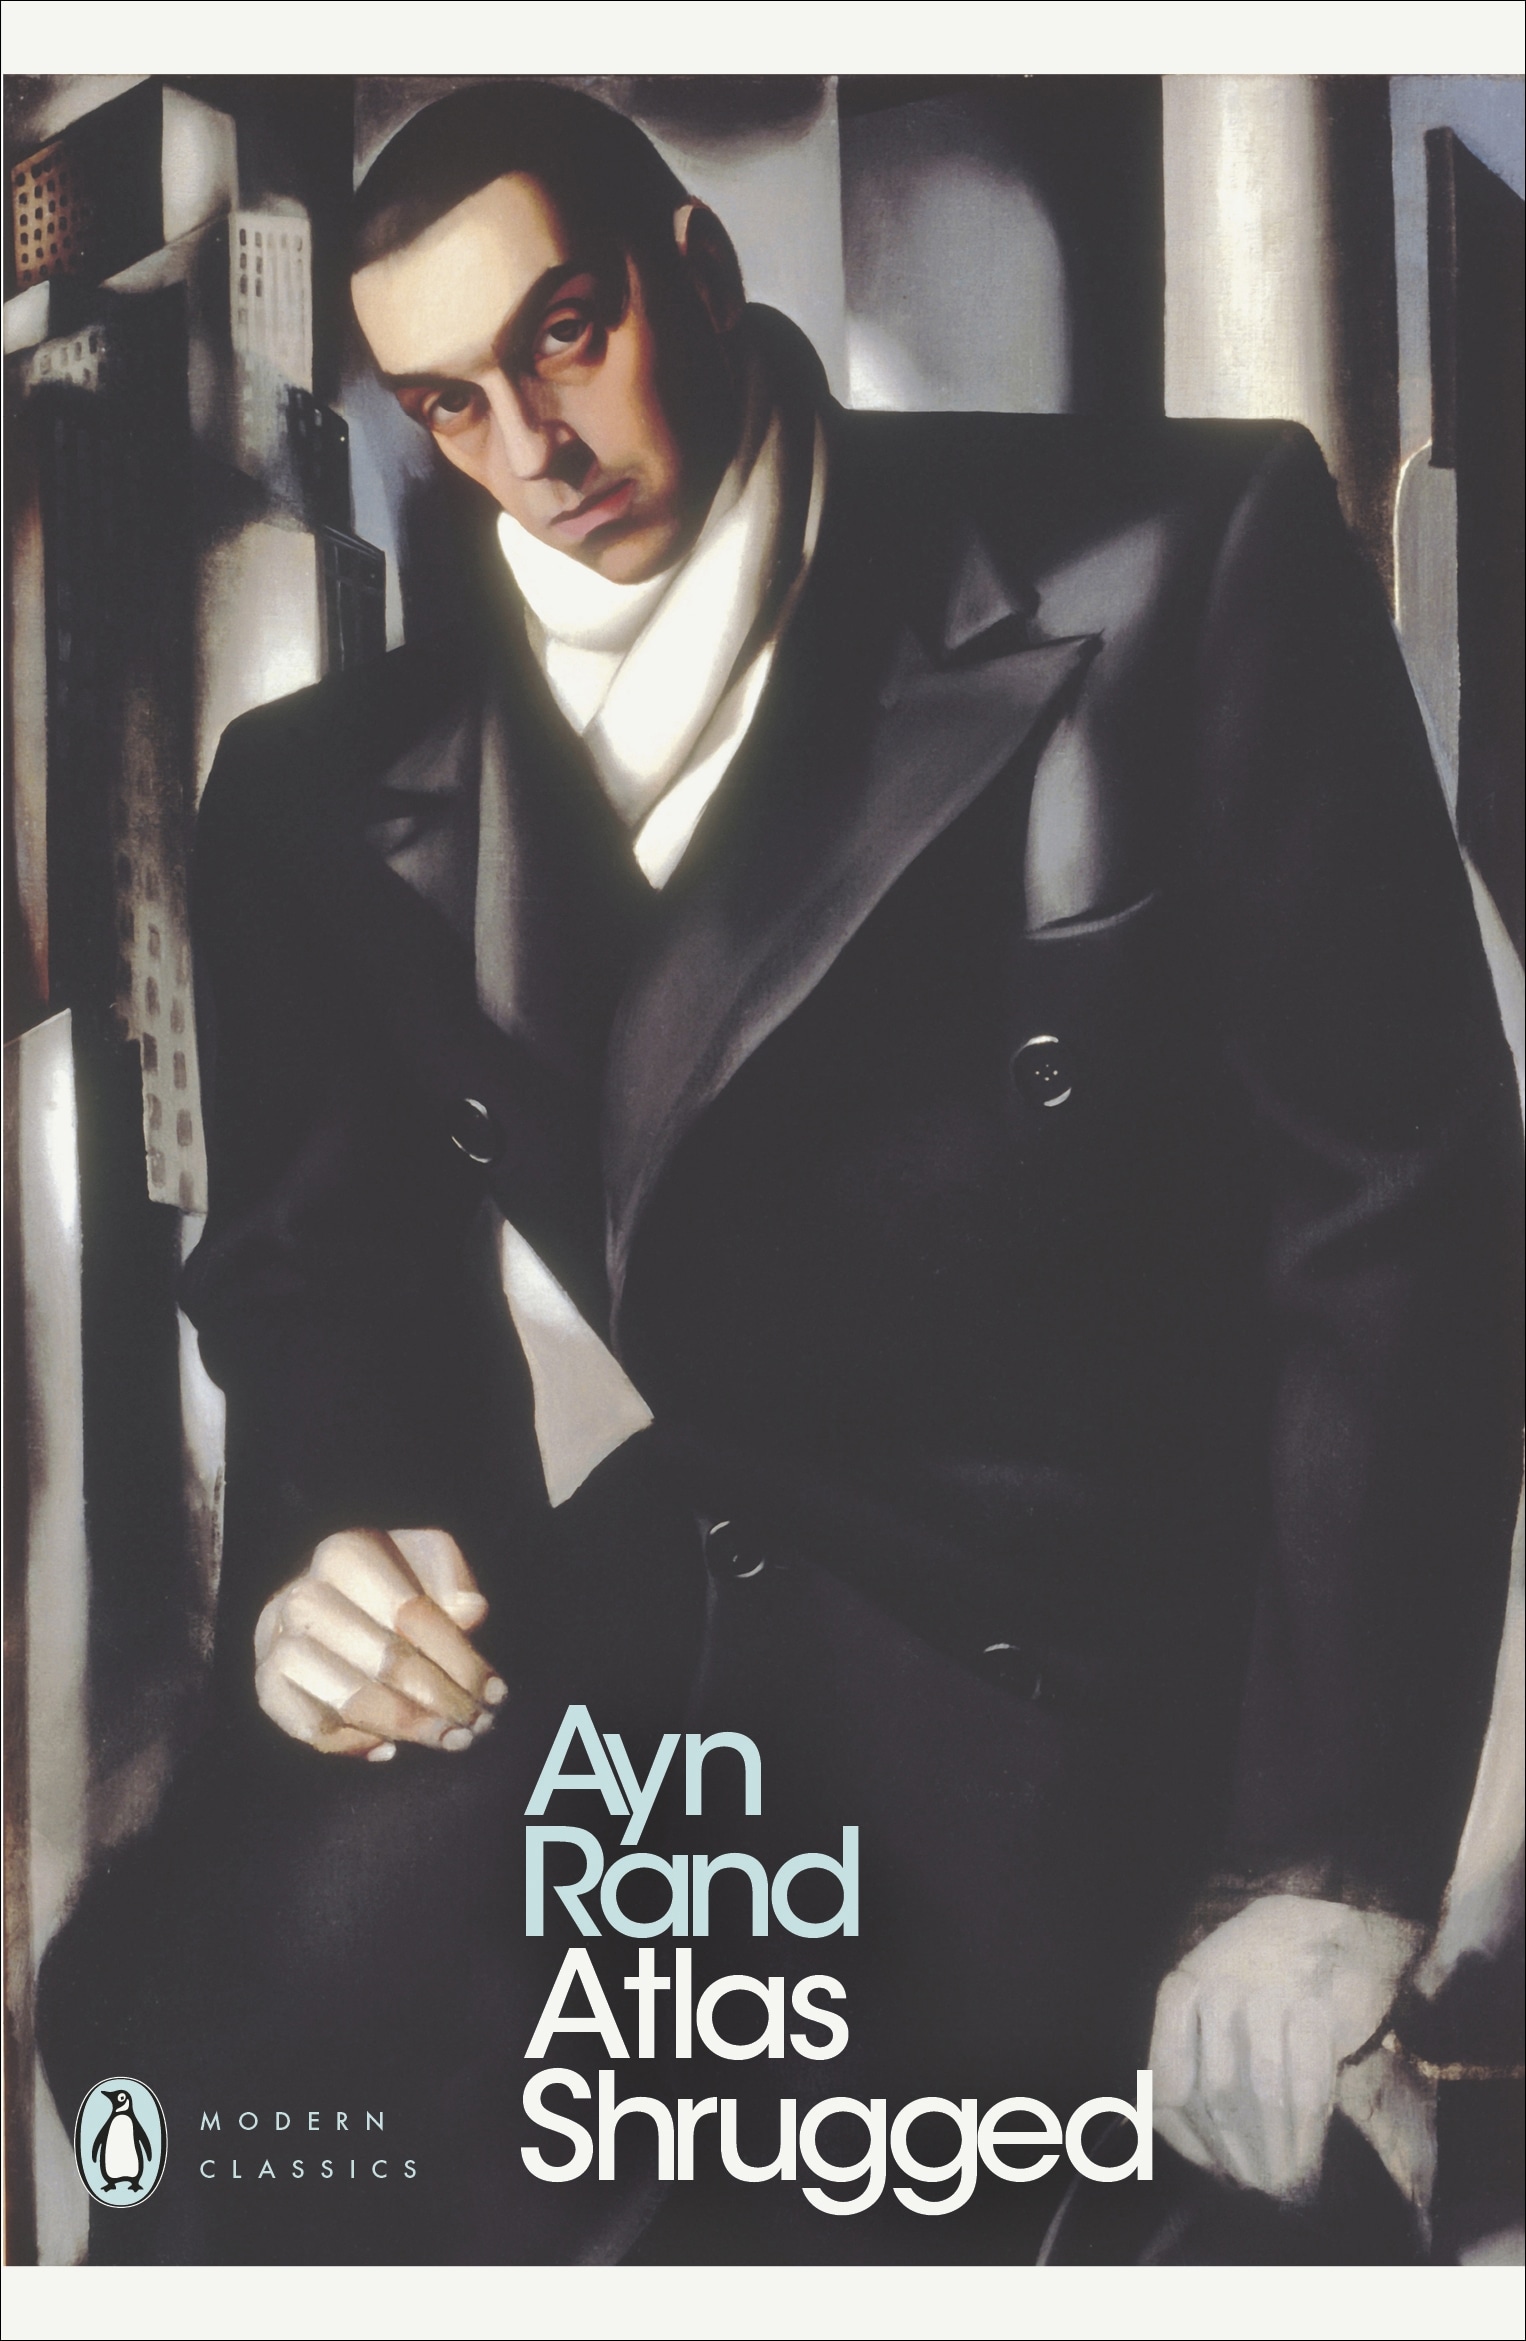 Book “Atlas Shrugged” by Ayn Rand